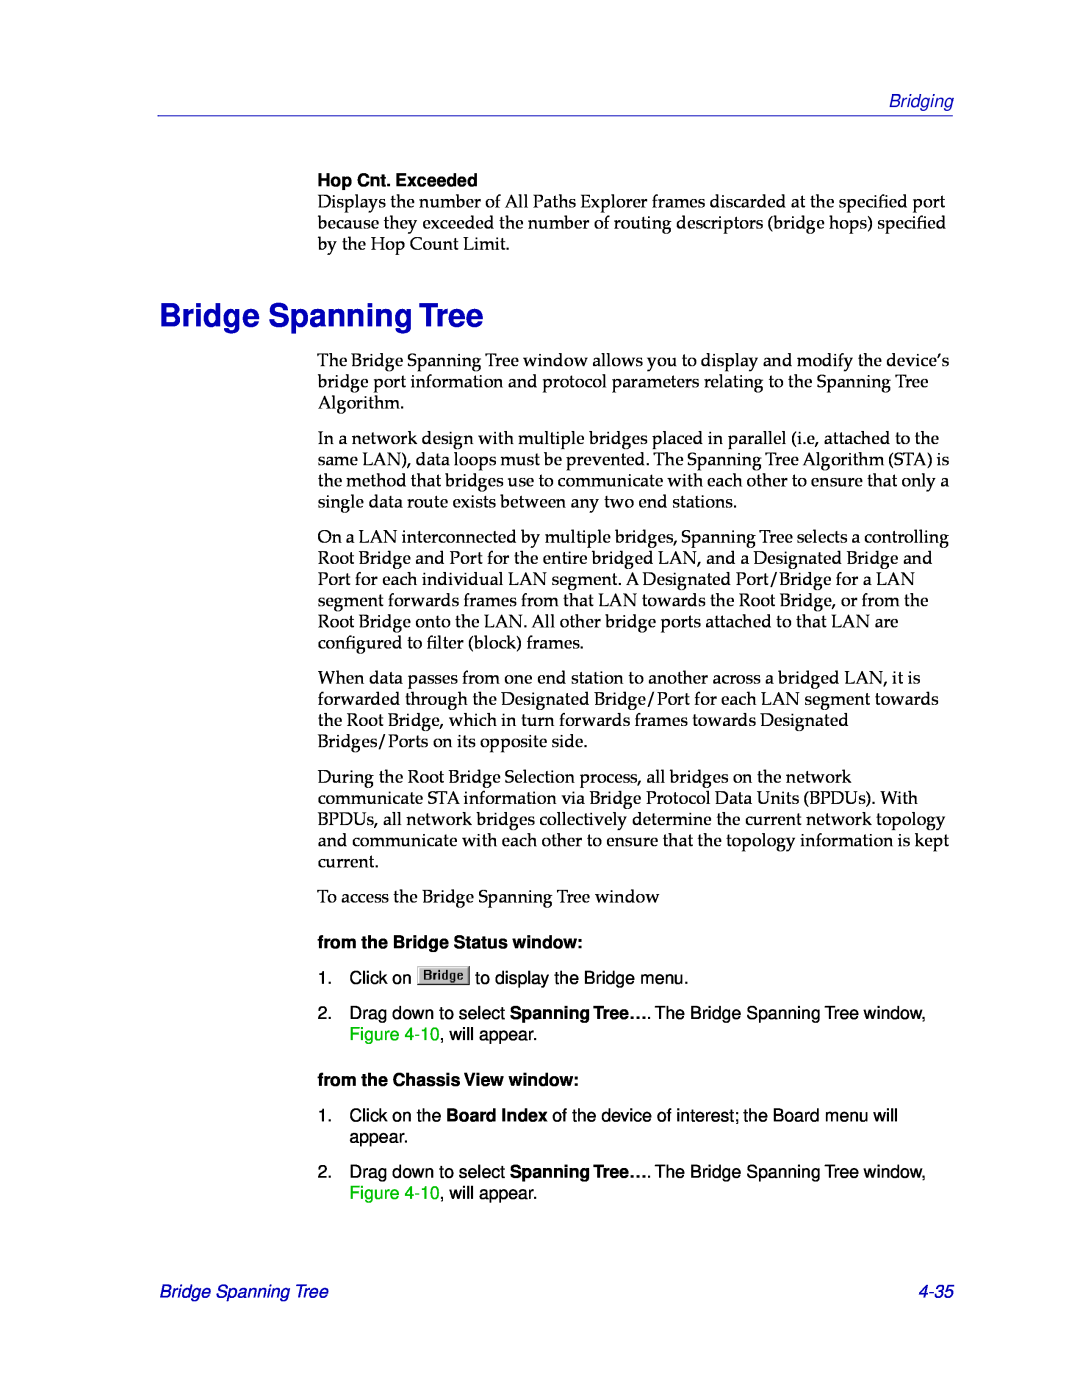 Cabletron Systems CSX200, CSX400 Bridge Spanning Tree, Hop Cnt. Exceeded, 4-35, Bridging, from the Bridge Status window 